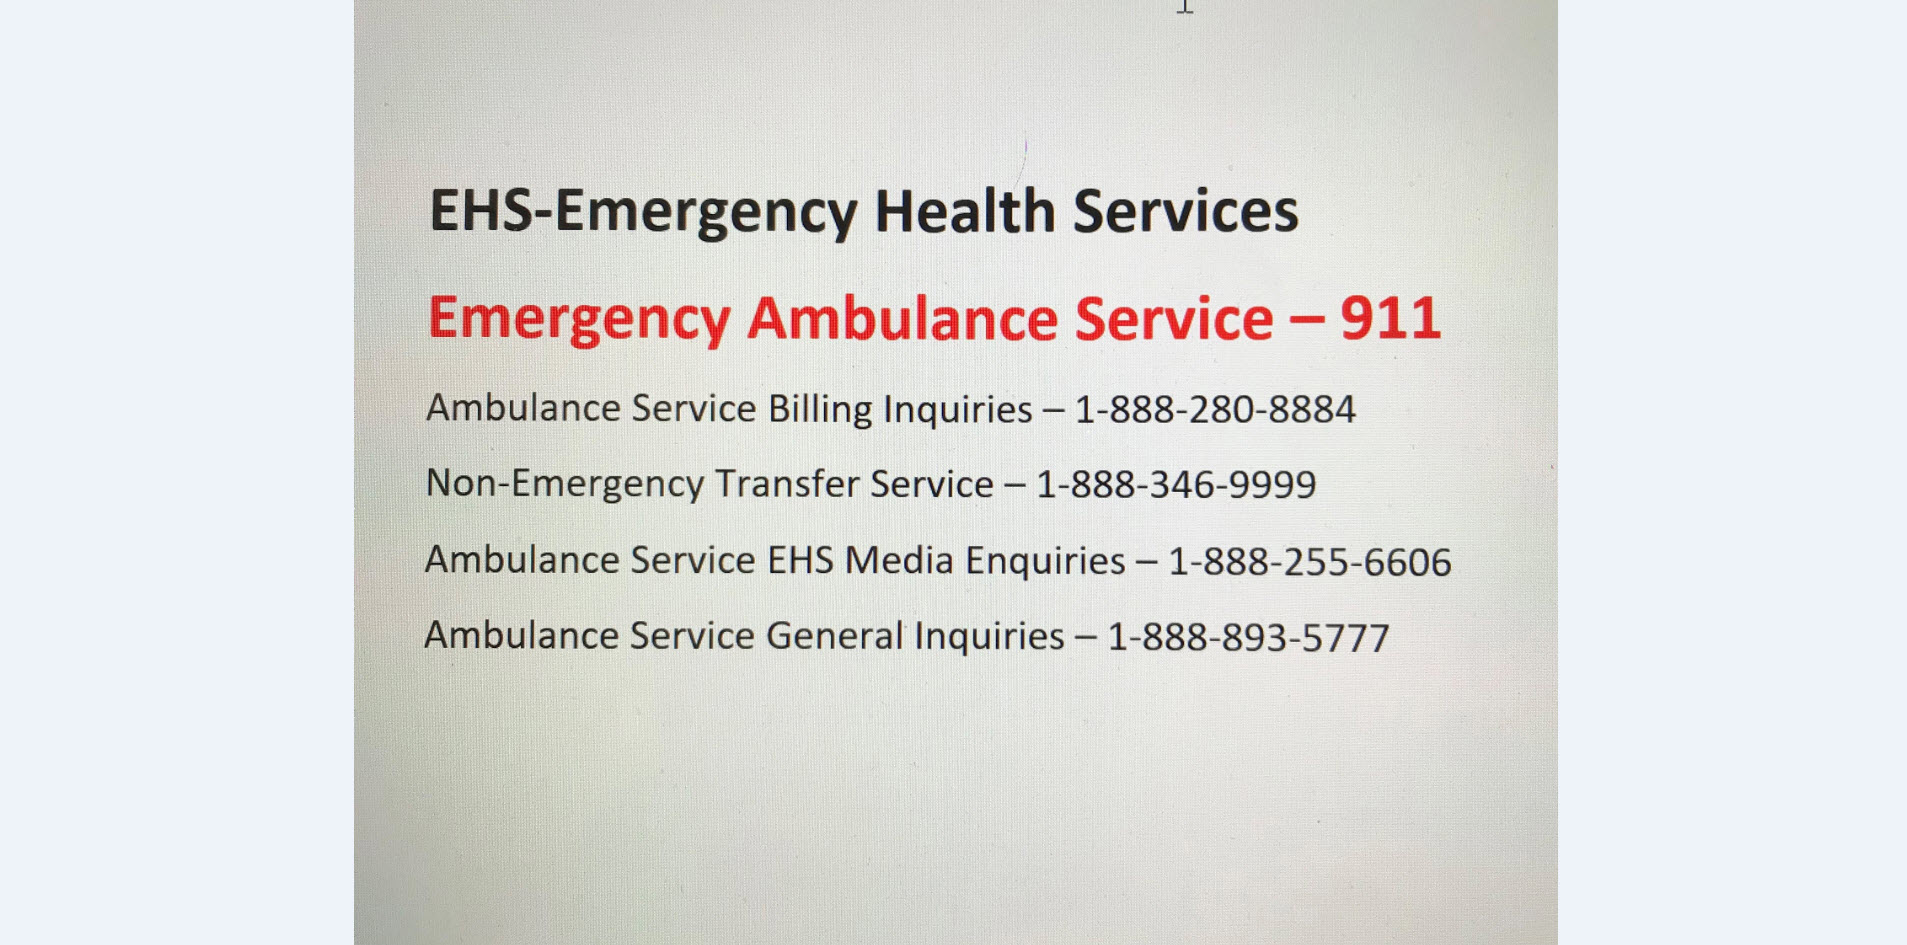 EHS-Emergency Health Services - Ambulance Service